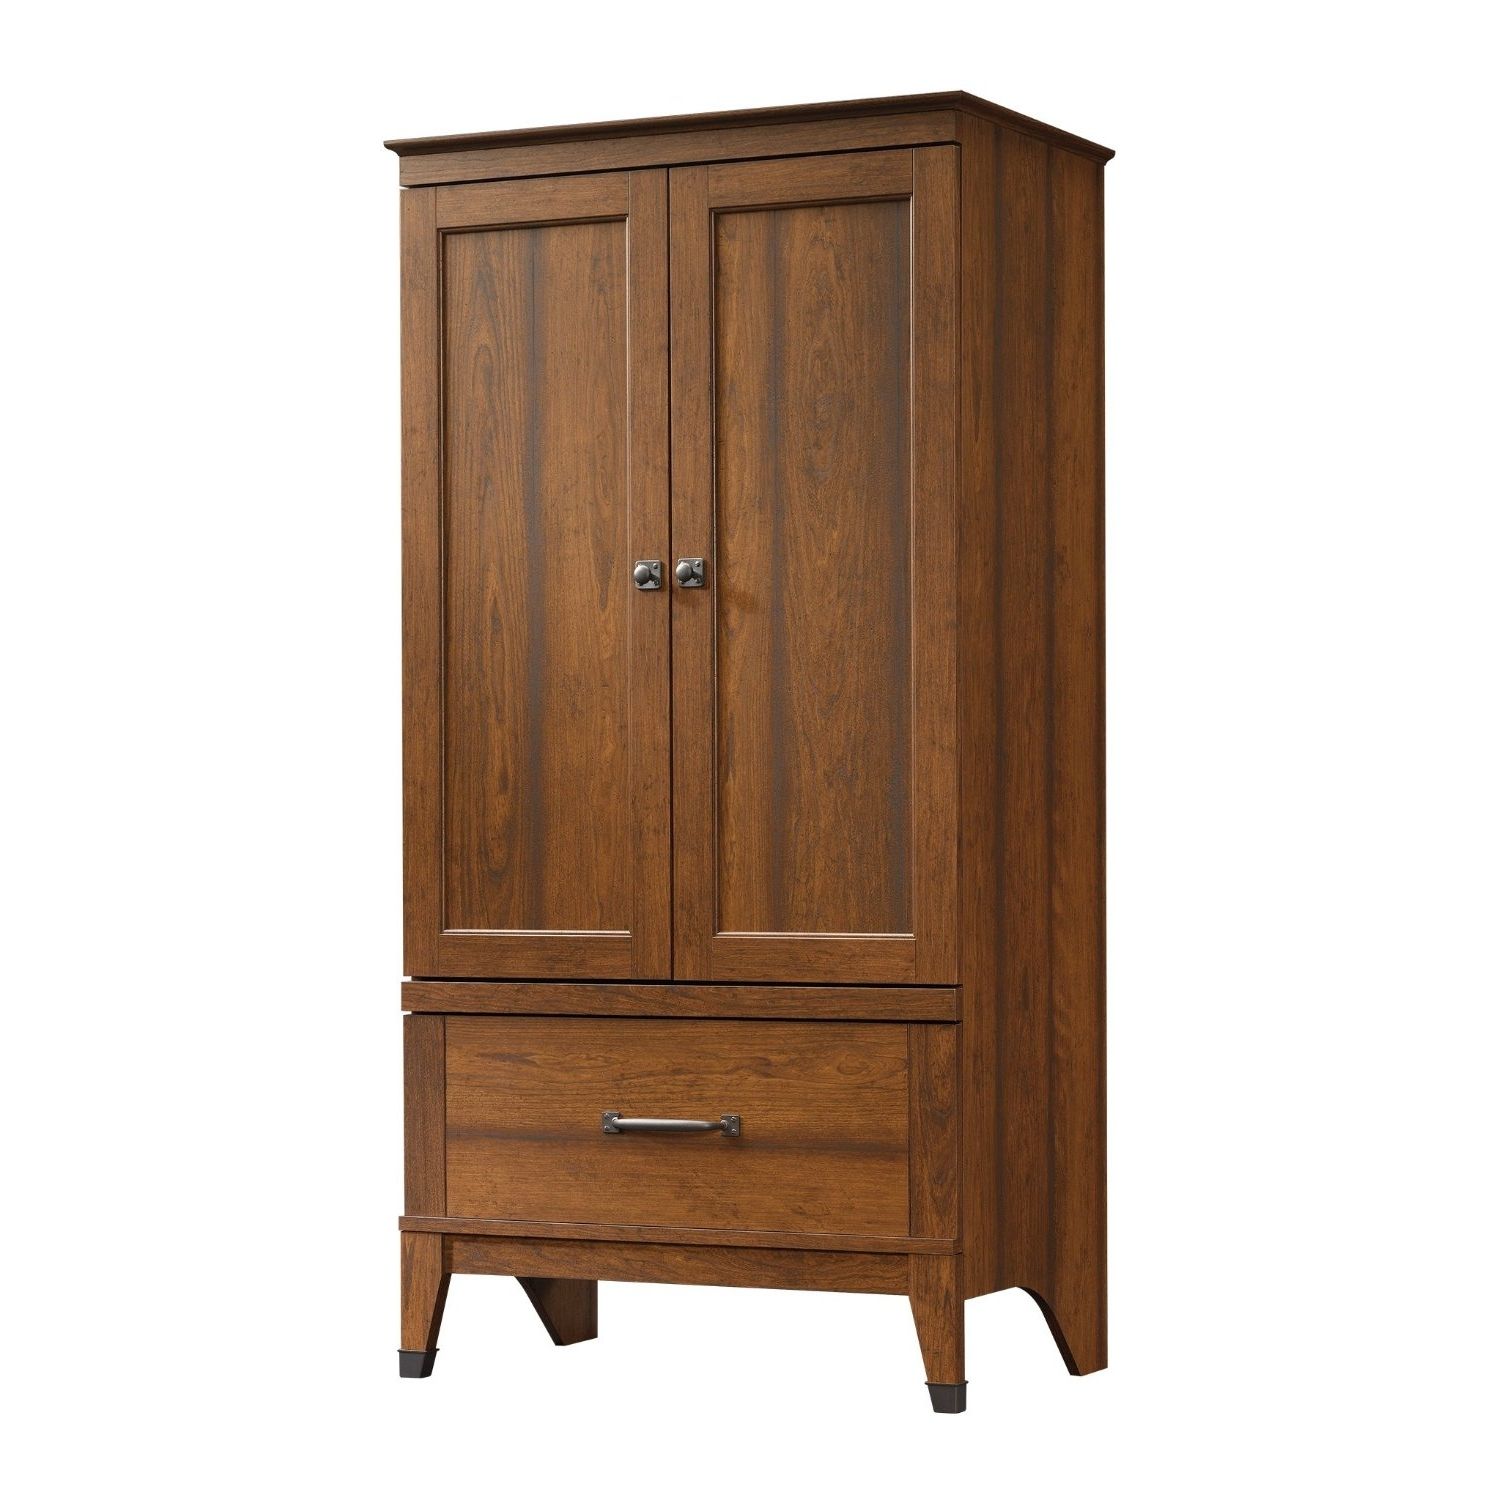 Furniture : Armoire In Bedroom 36 Wide Armoire Black Bedroom Regarding Most Recent Oak Wardrobes For Sale (View 11 of 15)